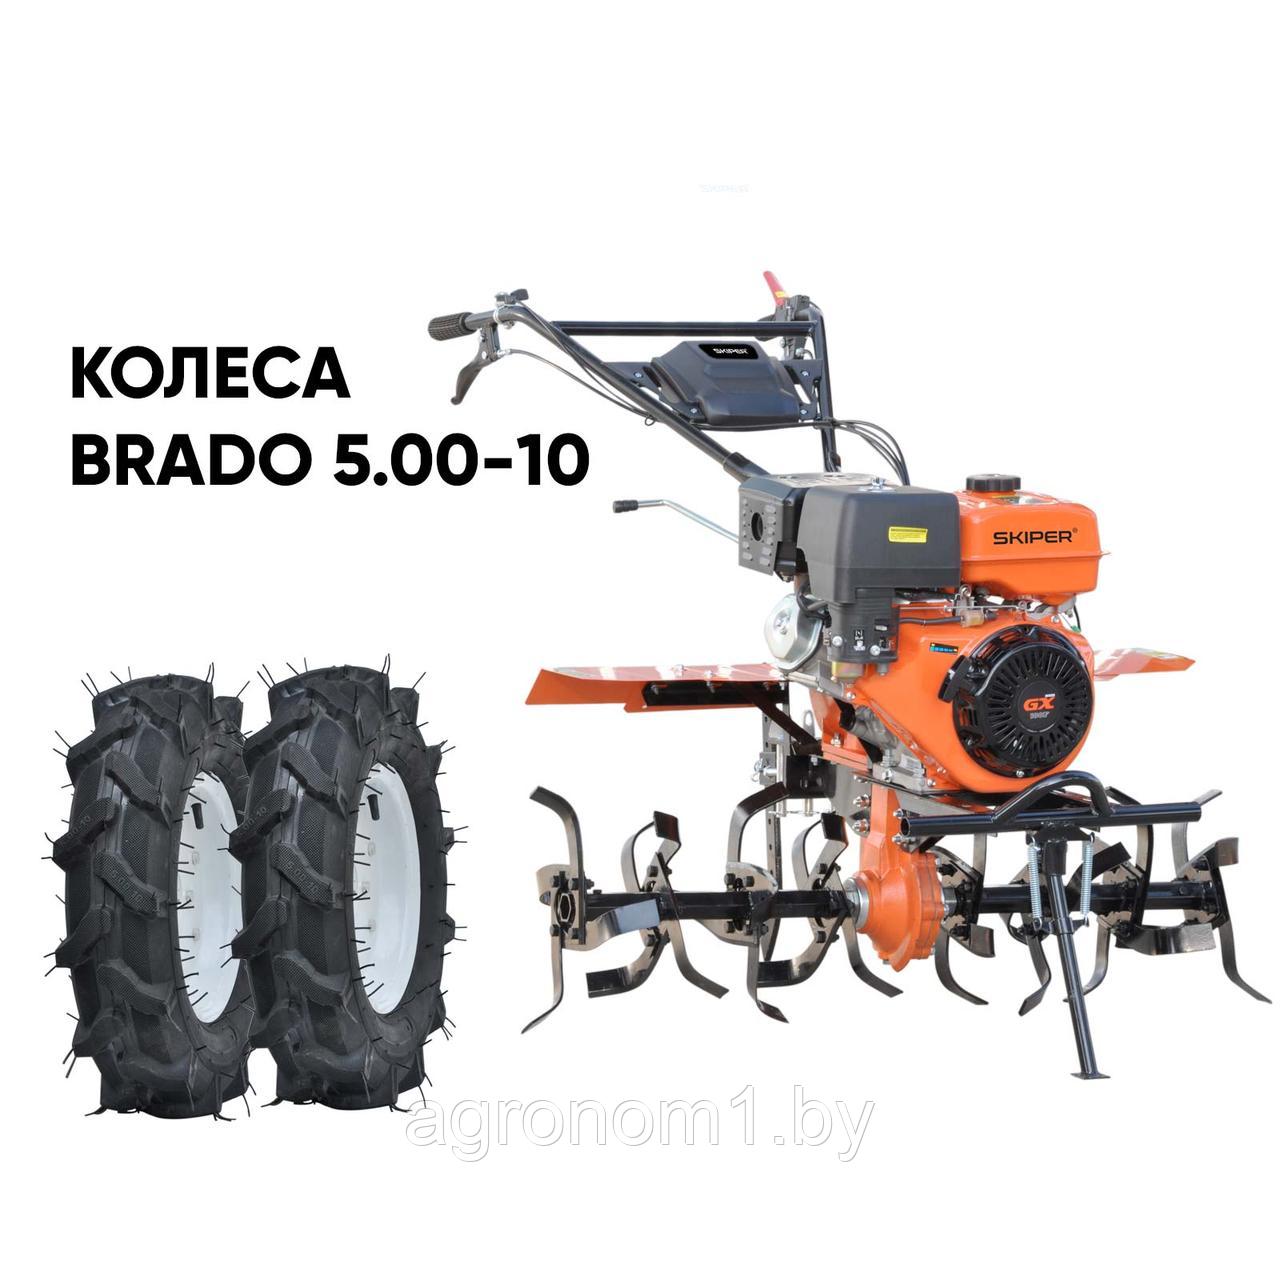 Мотоблок SKIPER SP-1400S + колеса BRADO 5.00-10 (комплект)